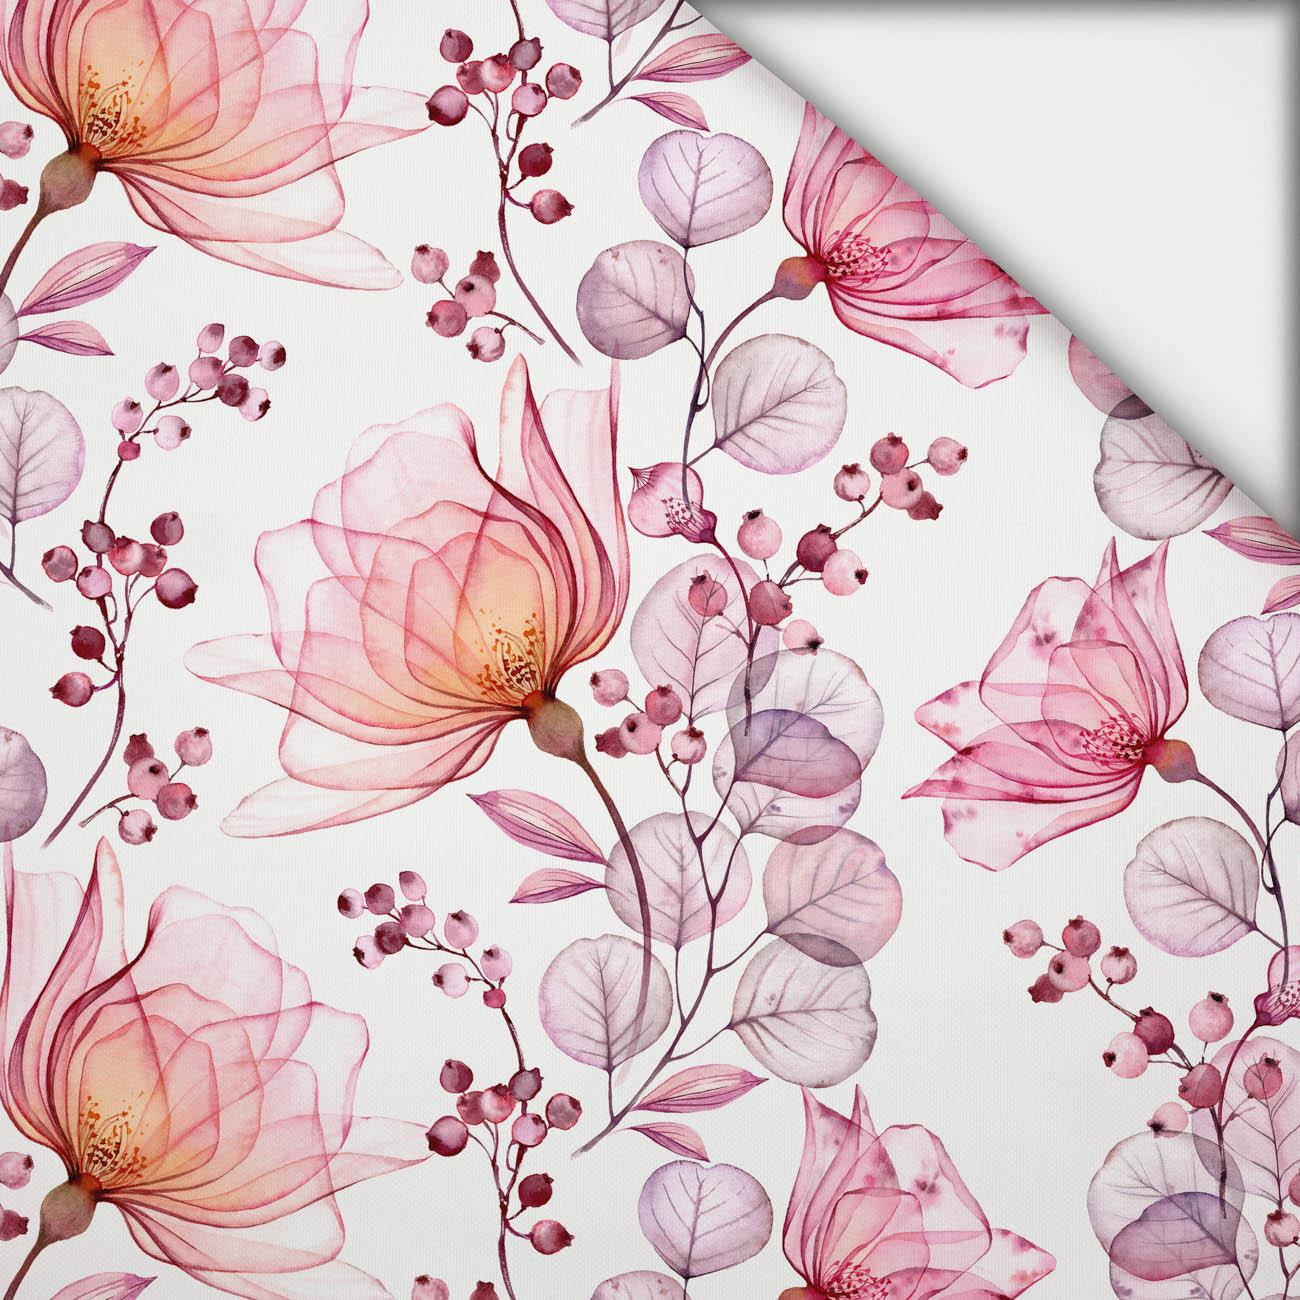 FLOWERS pat. 4 (pink) - light brushed knitwear